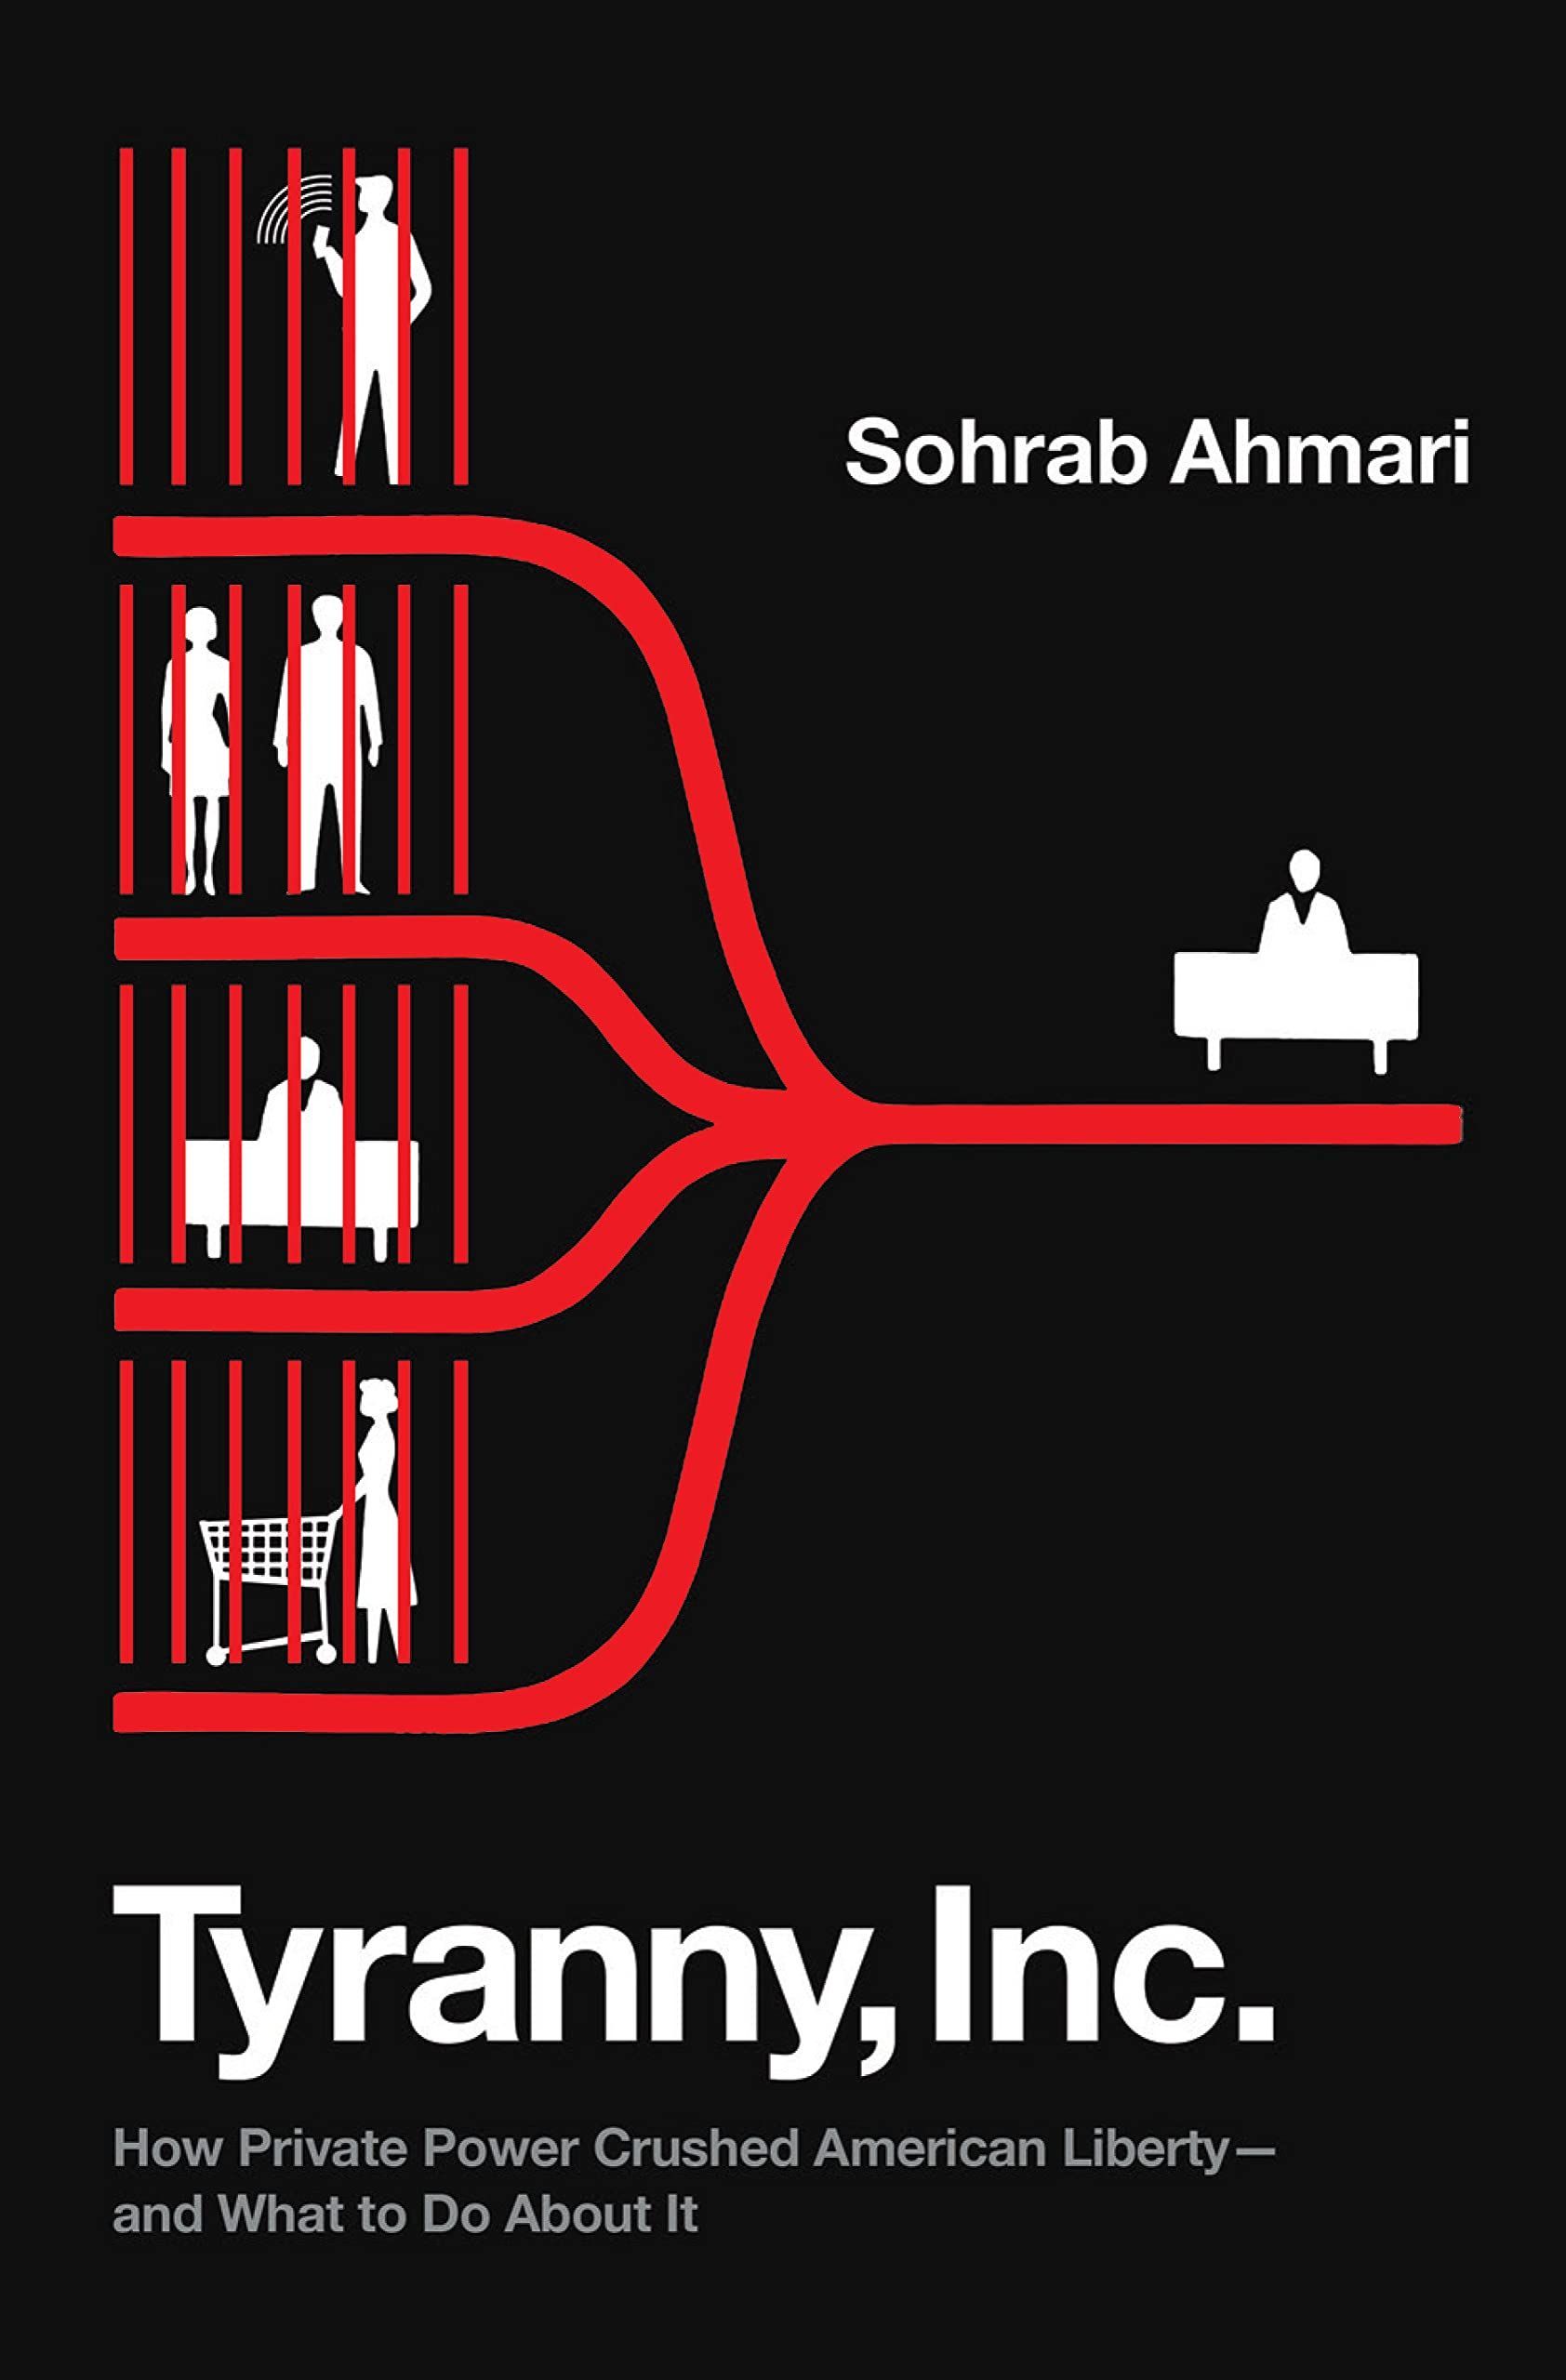 The Enemy of My Enemy Is Not My Friend: On Sohrab Ahmari’s “Tyranny, Inc.” and Patrick J. Deneen’s “Regime Change”